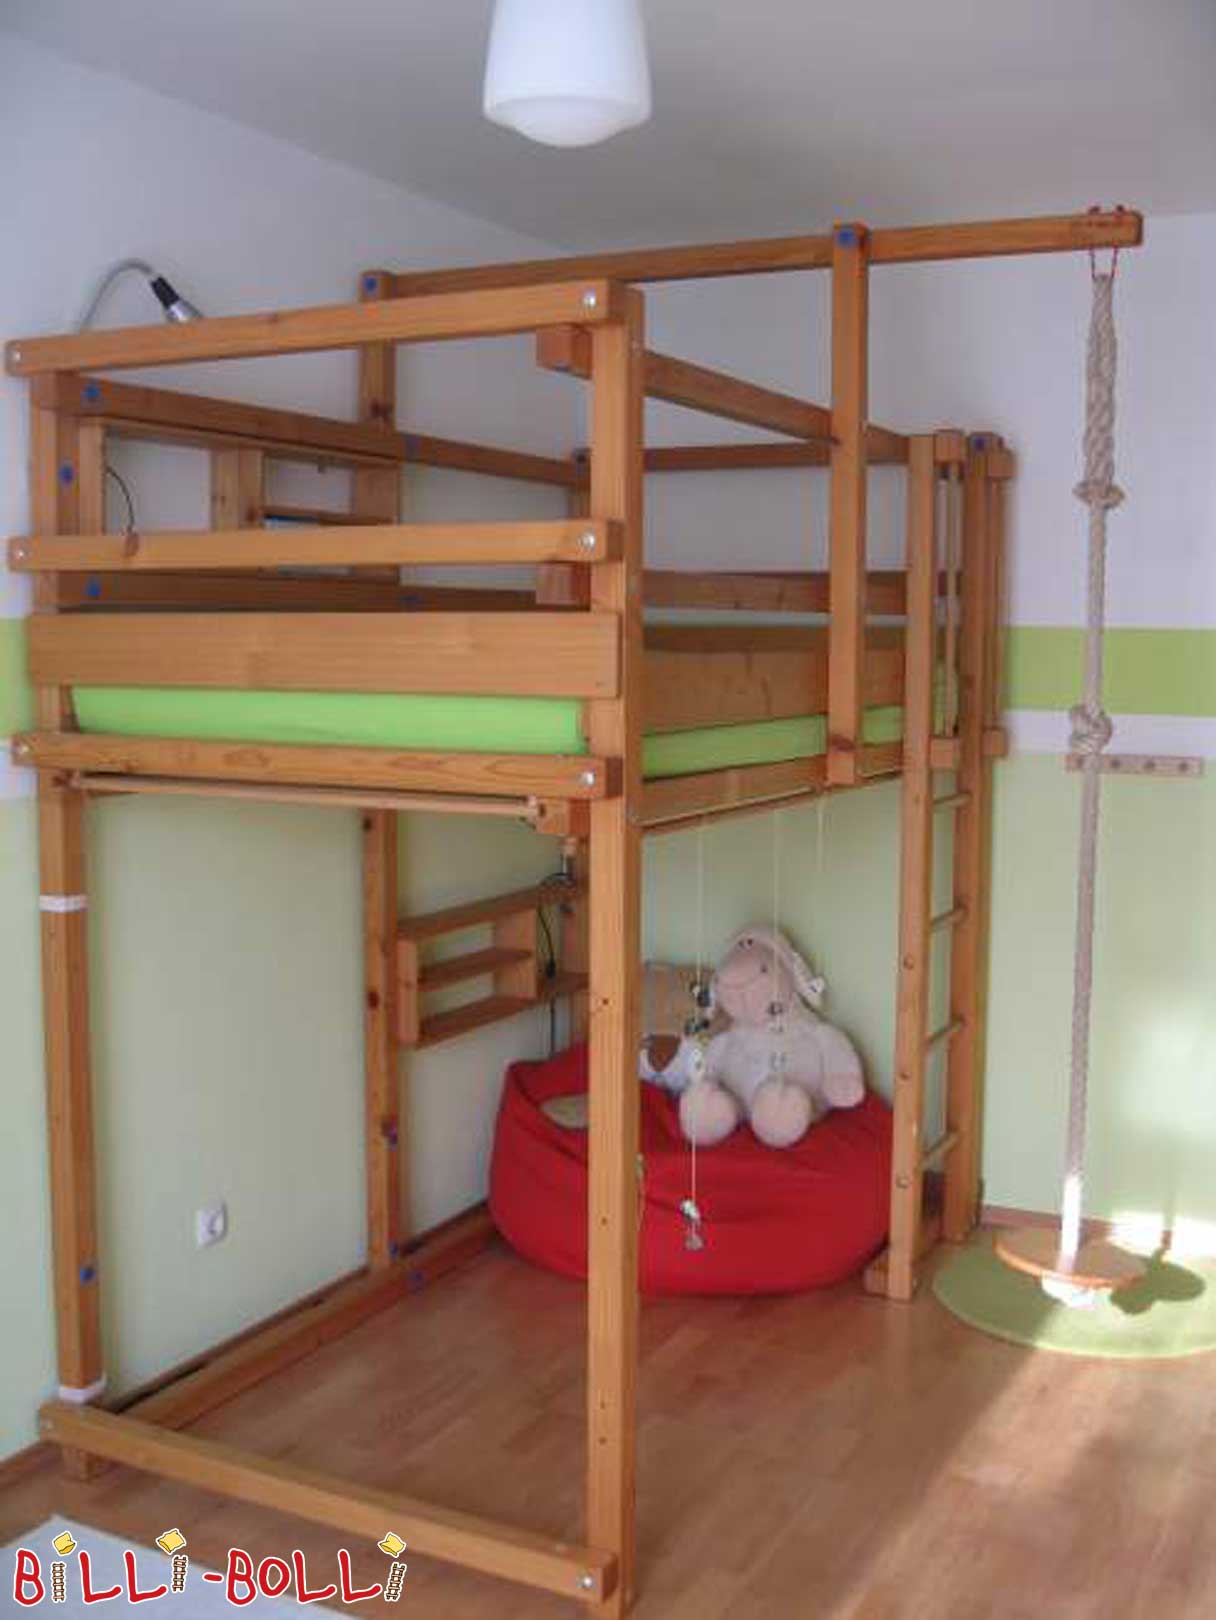 Billi-Bolli bunk bed (Category: second hand loft bed)